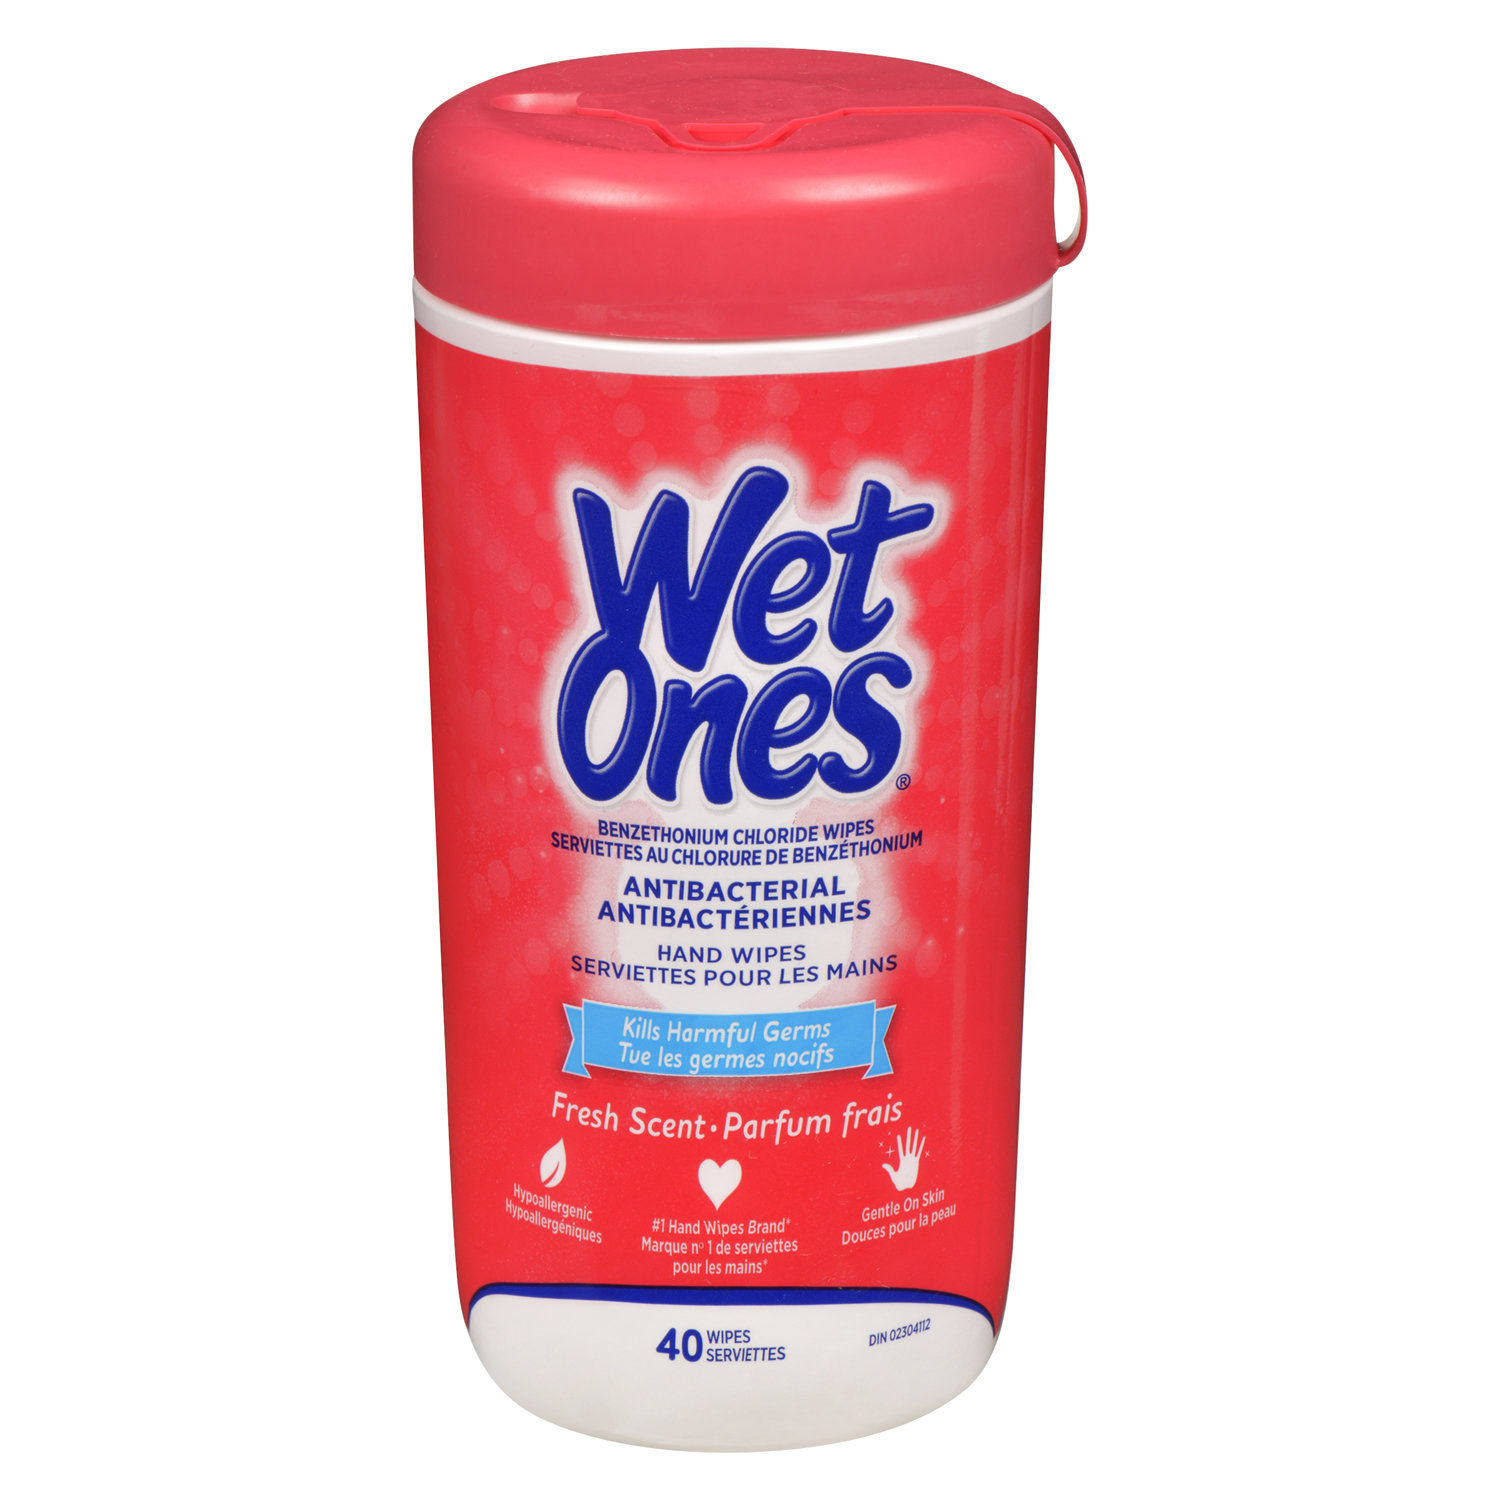 Wet Ones® Sensitive Skin Hand & Face Wipes - Fragrance Free Essentials –  Wet Ones US